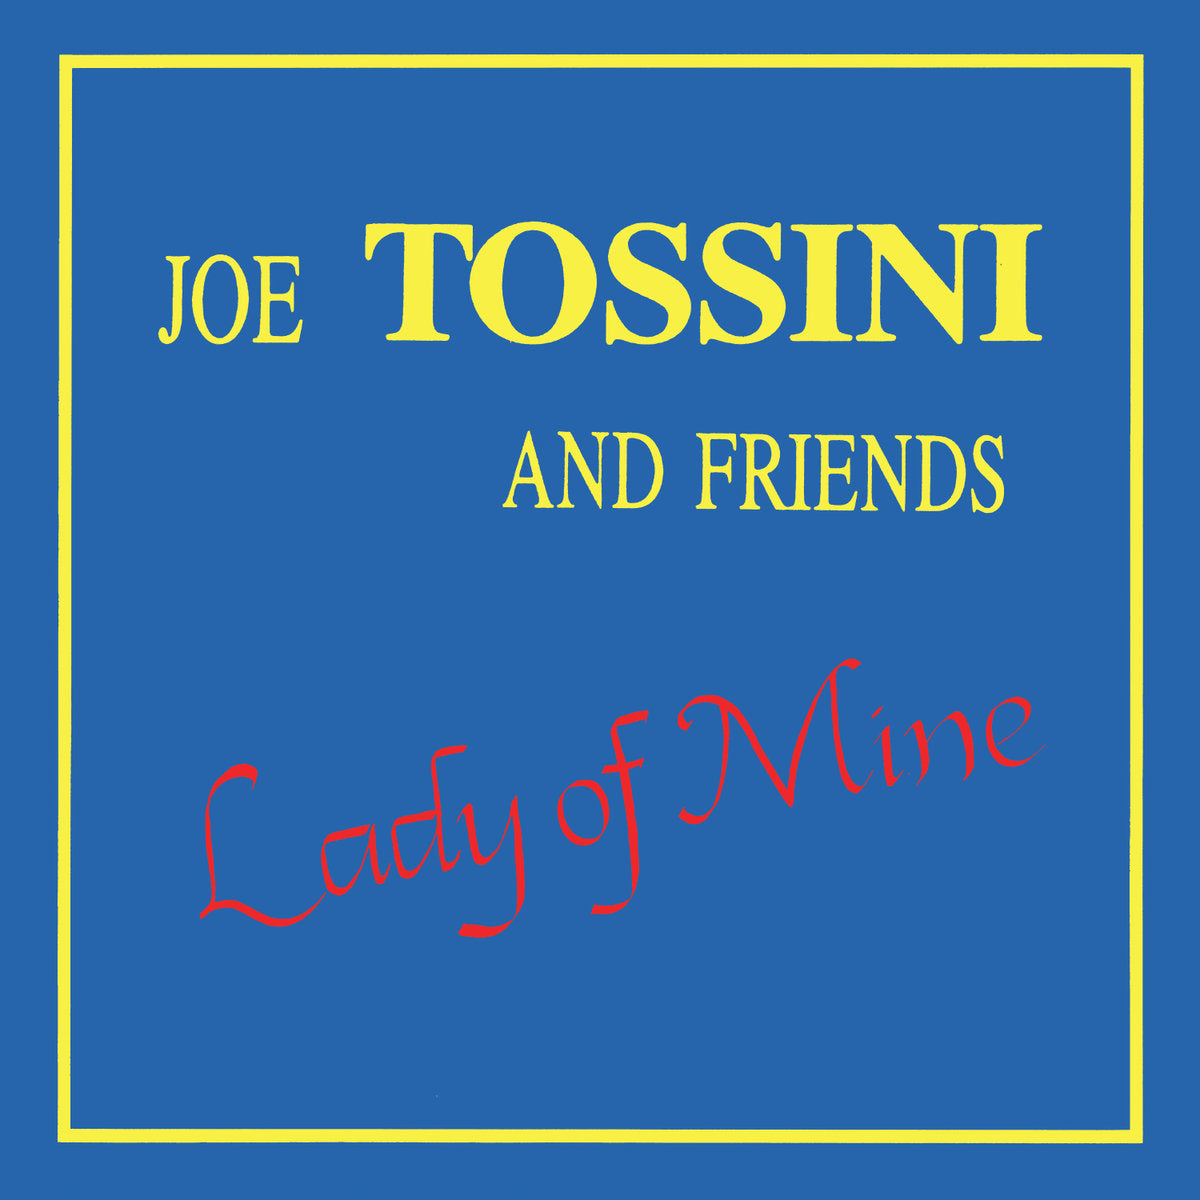 Joe Tossini and Friends - Lady of Mine